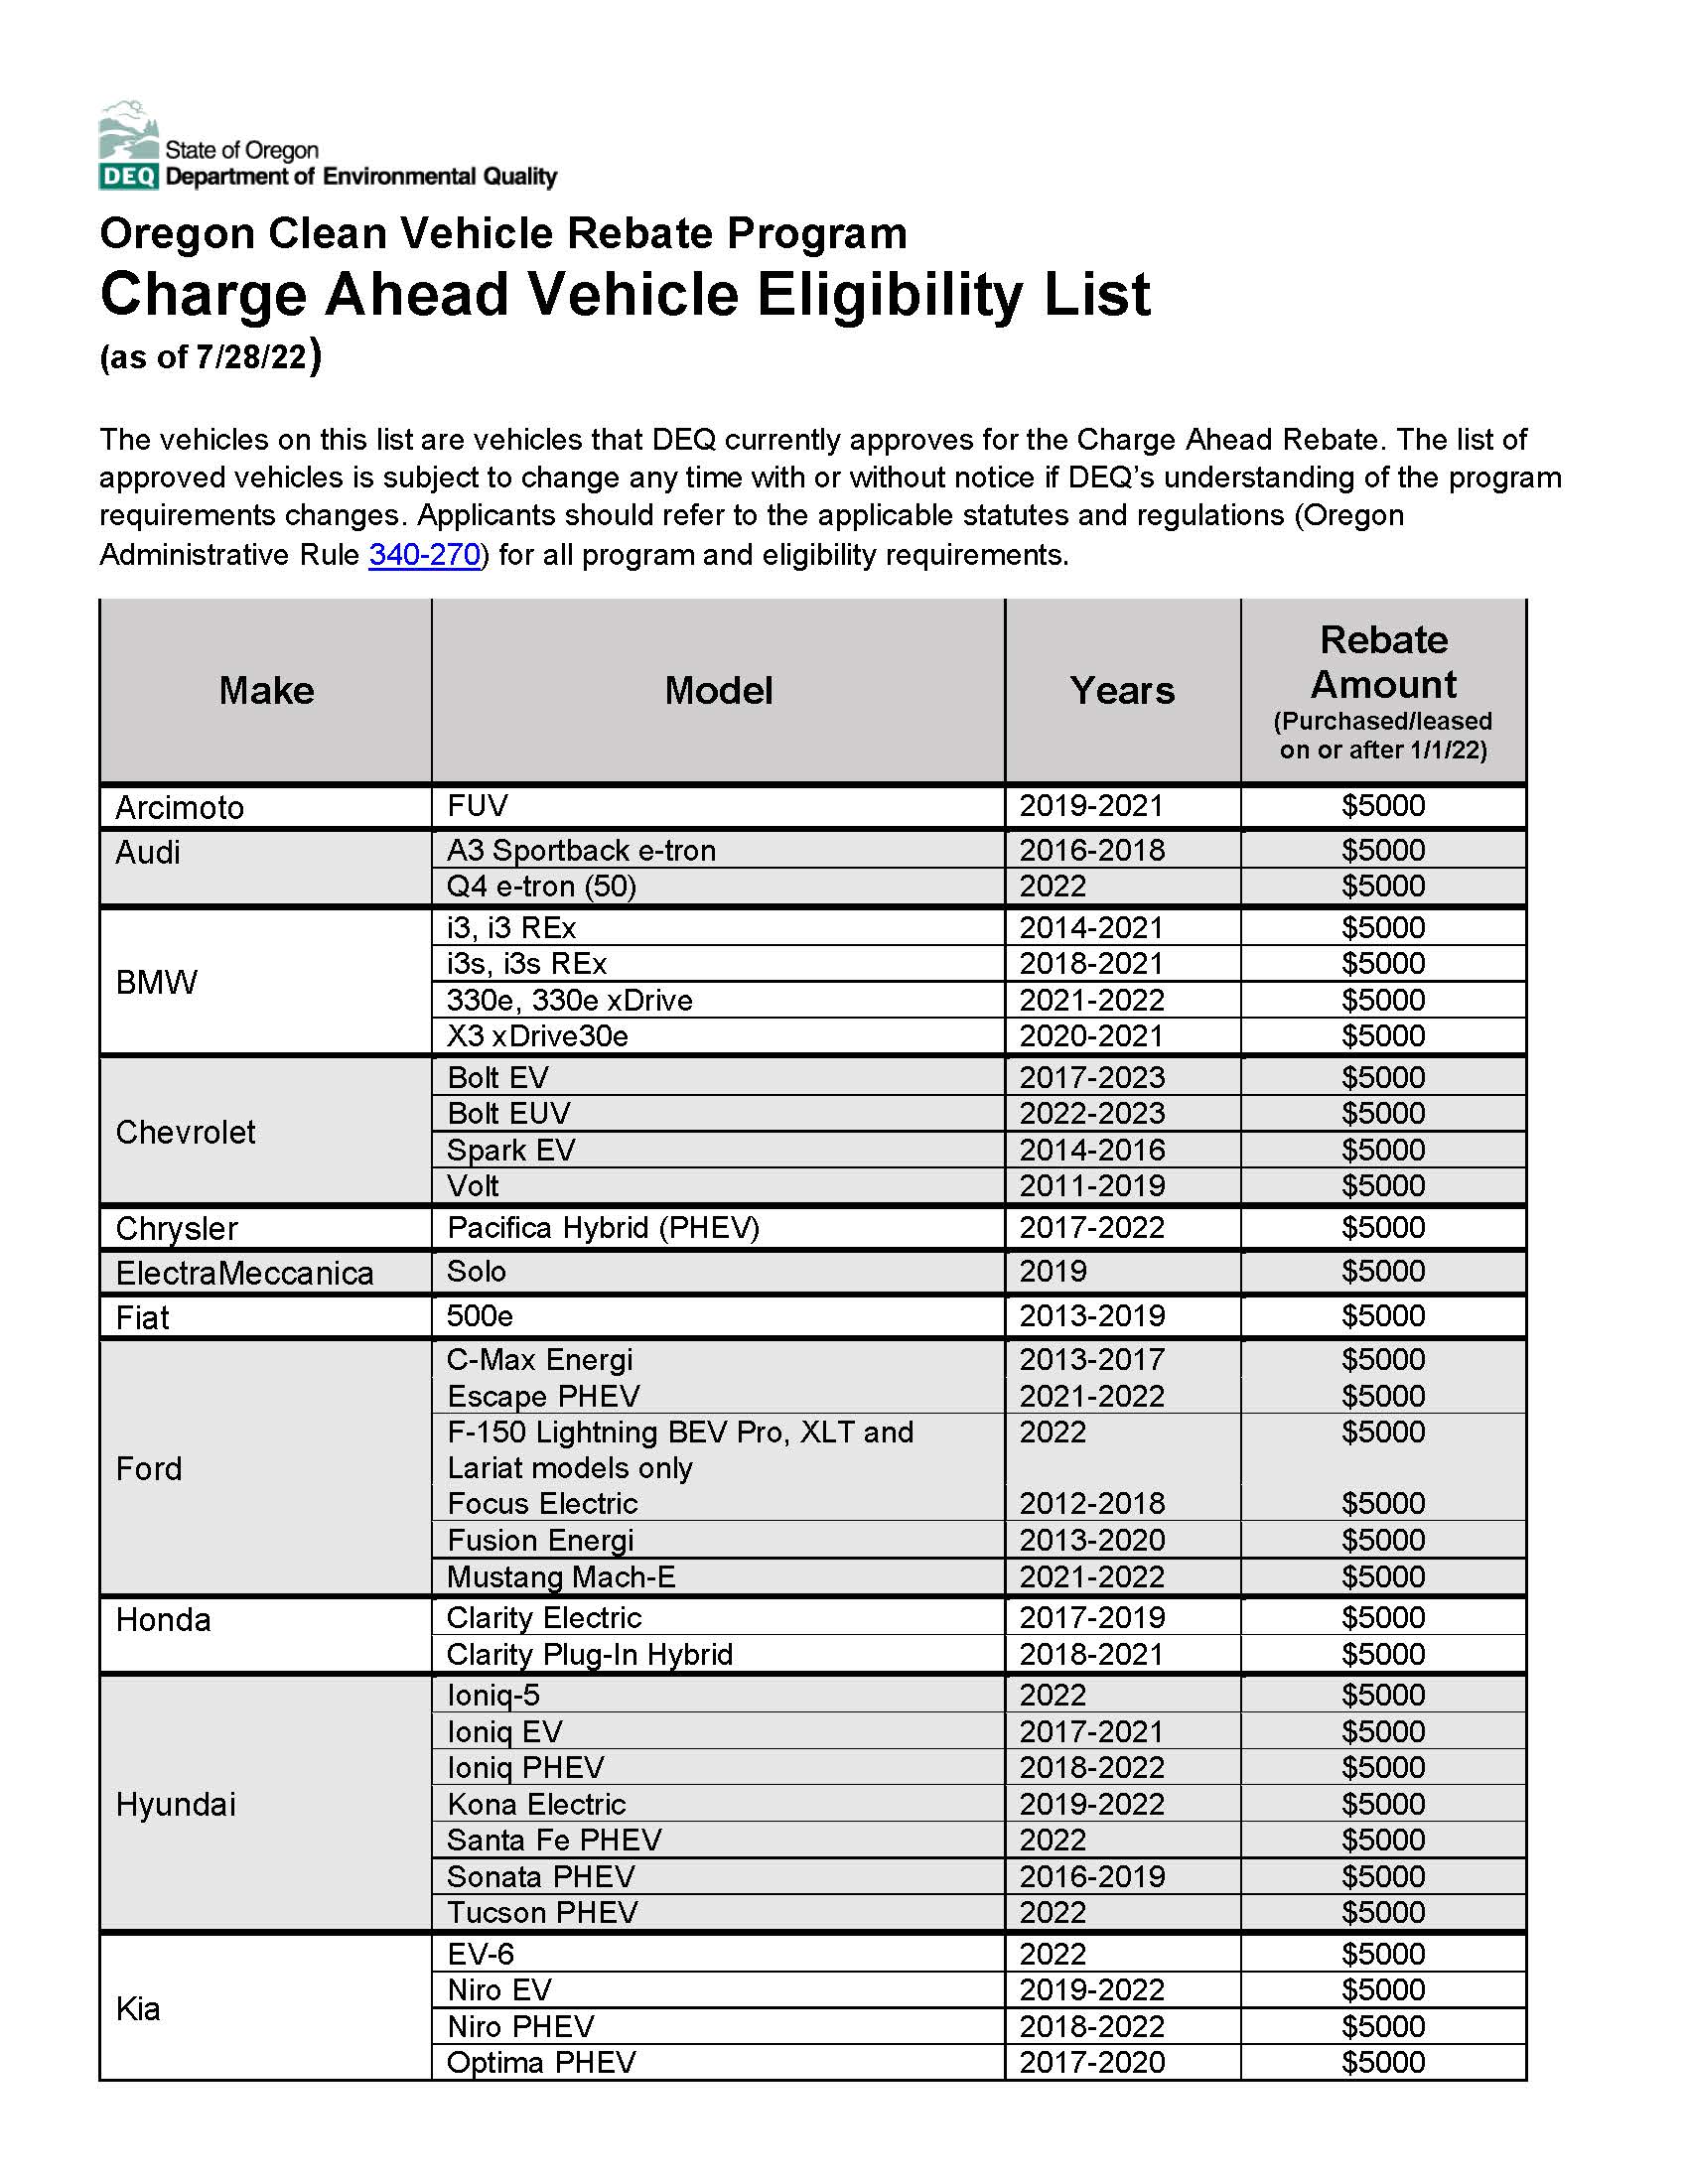 Government Vehicle Rebate Program